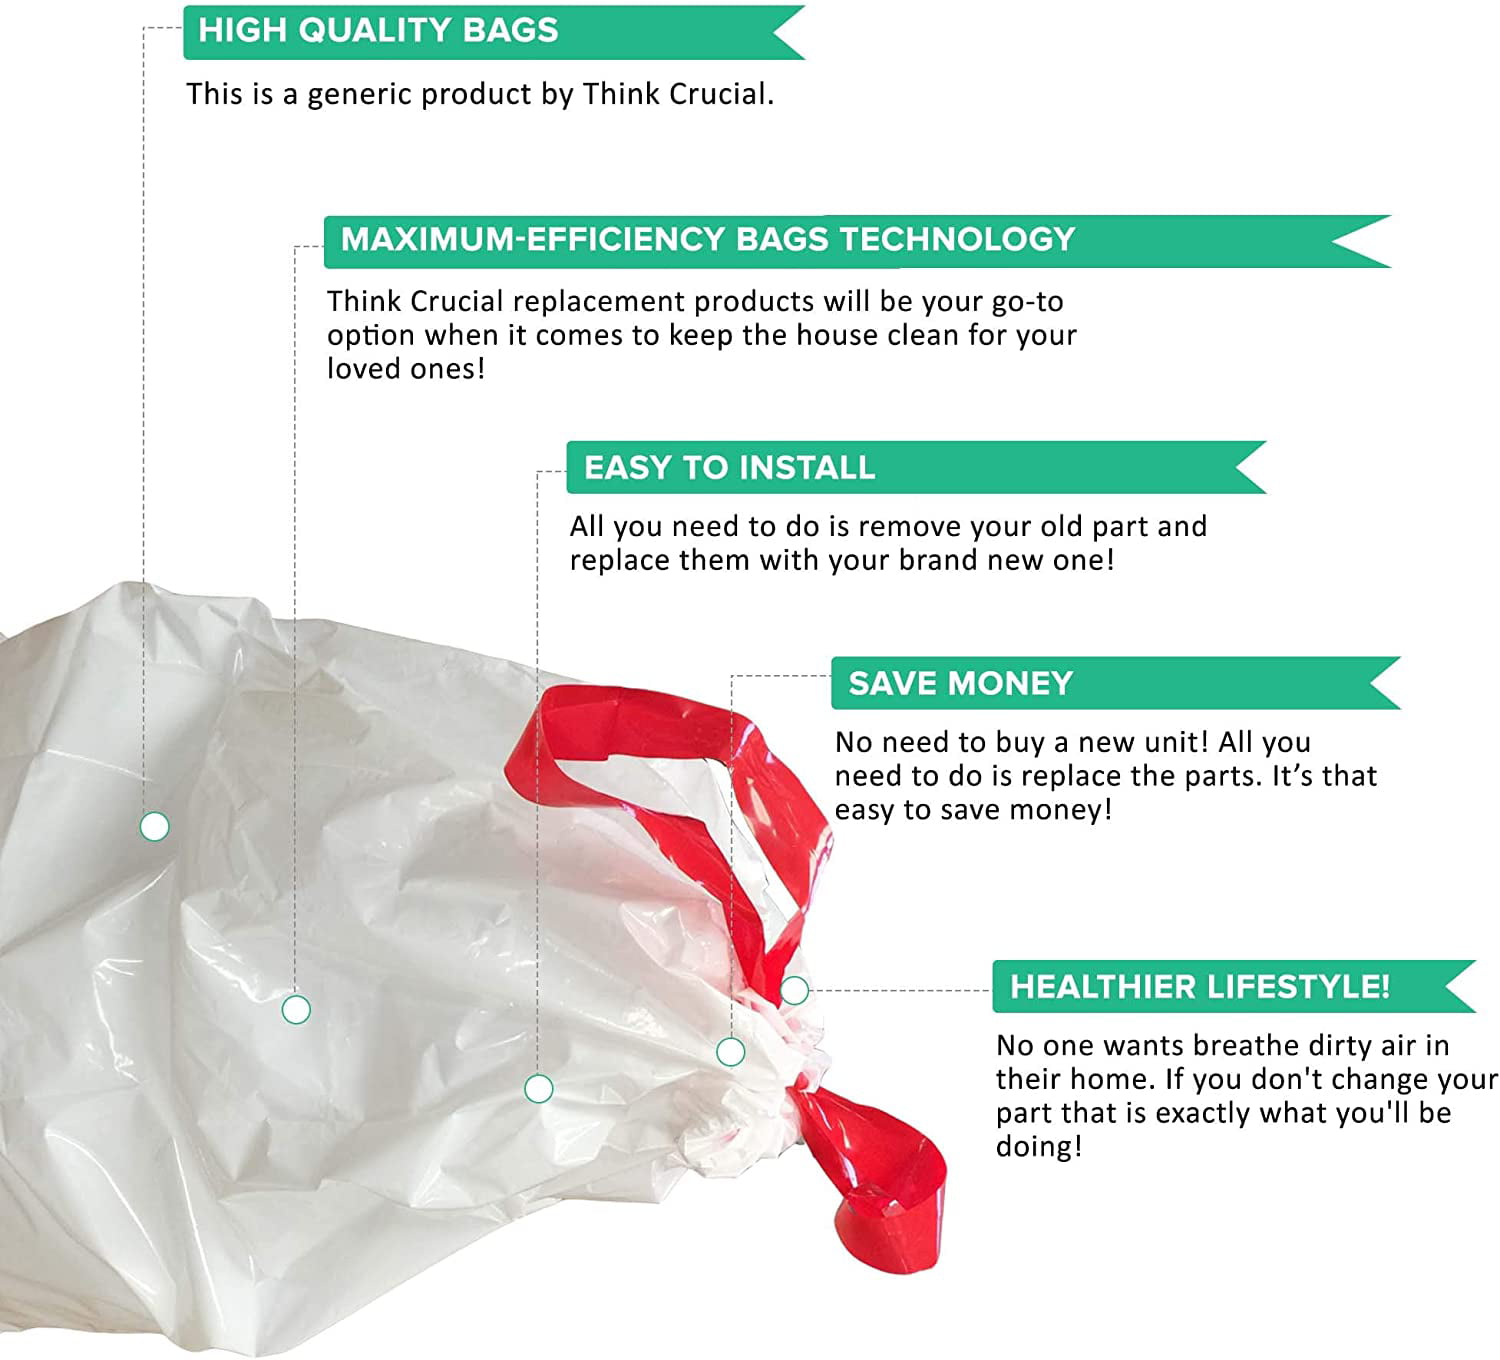 100pk Replacement Durable Garbage Bags, Fits Simplehuman¨ Ôsize ''C''Ô,  10-12L / 2.6-3.2 Gallon